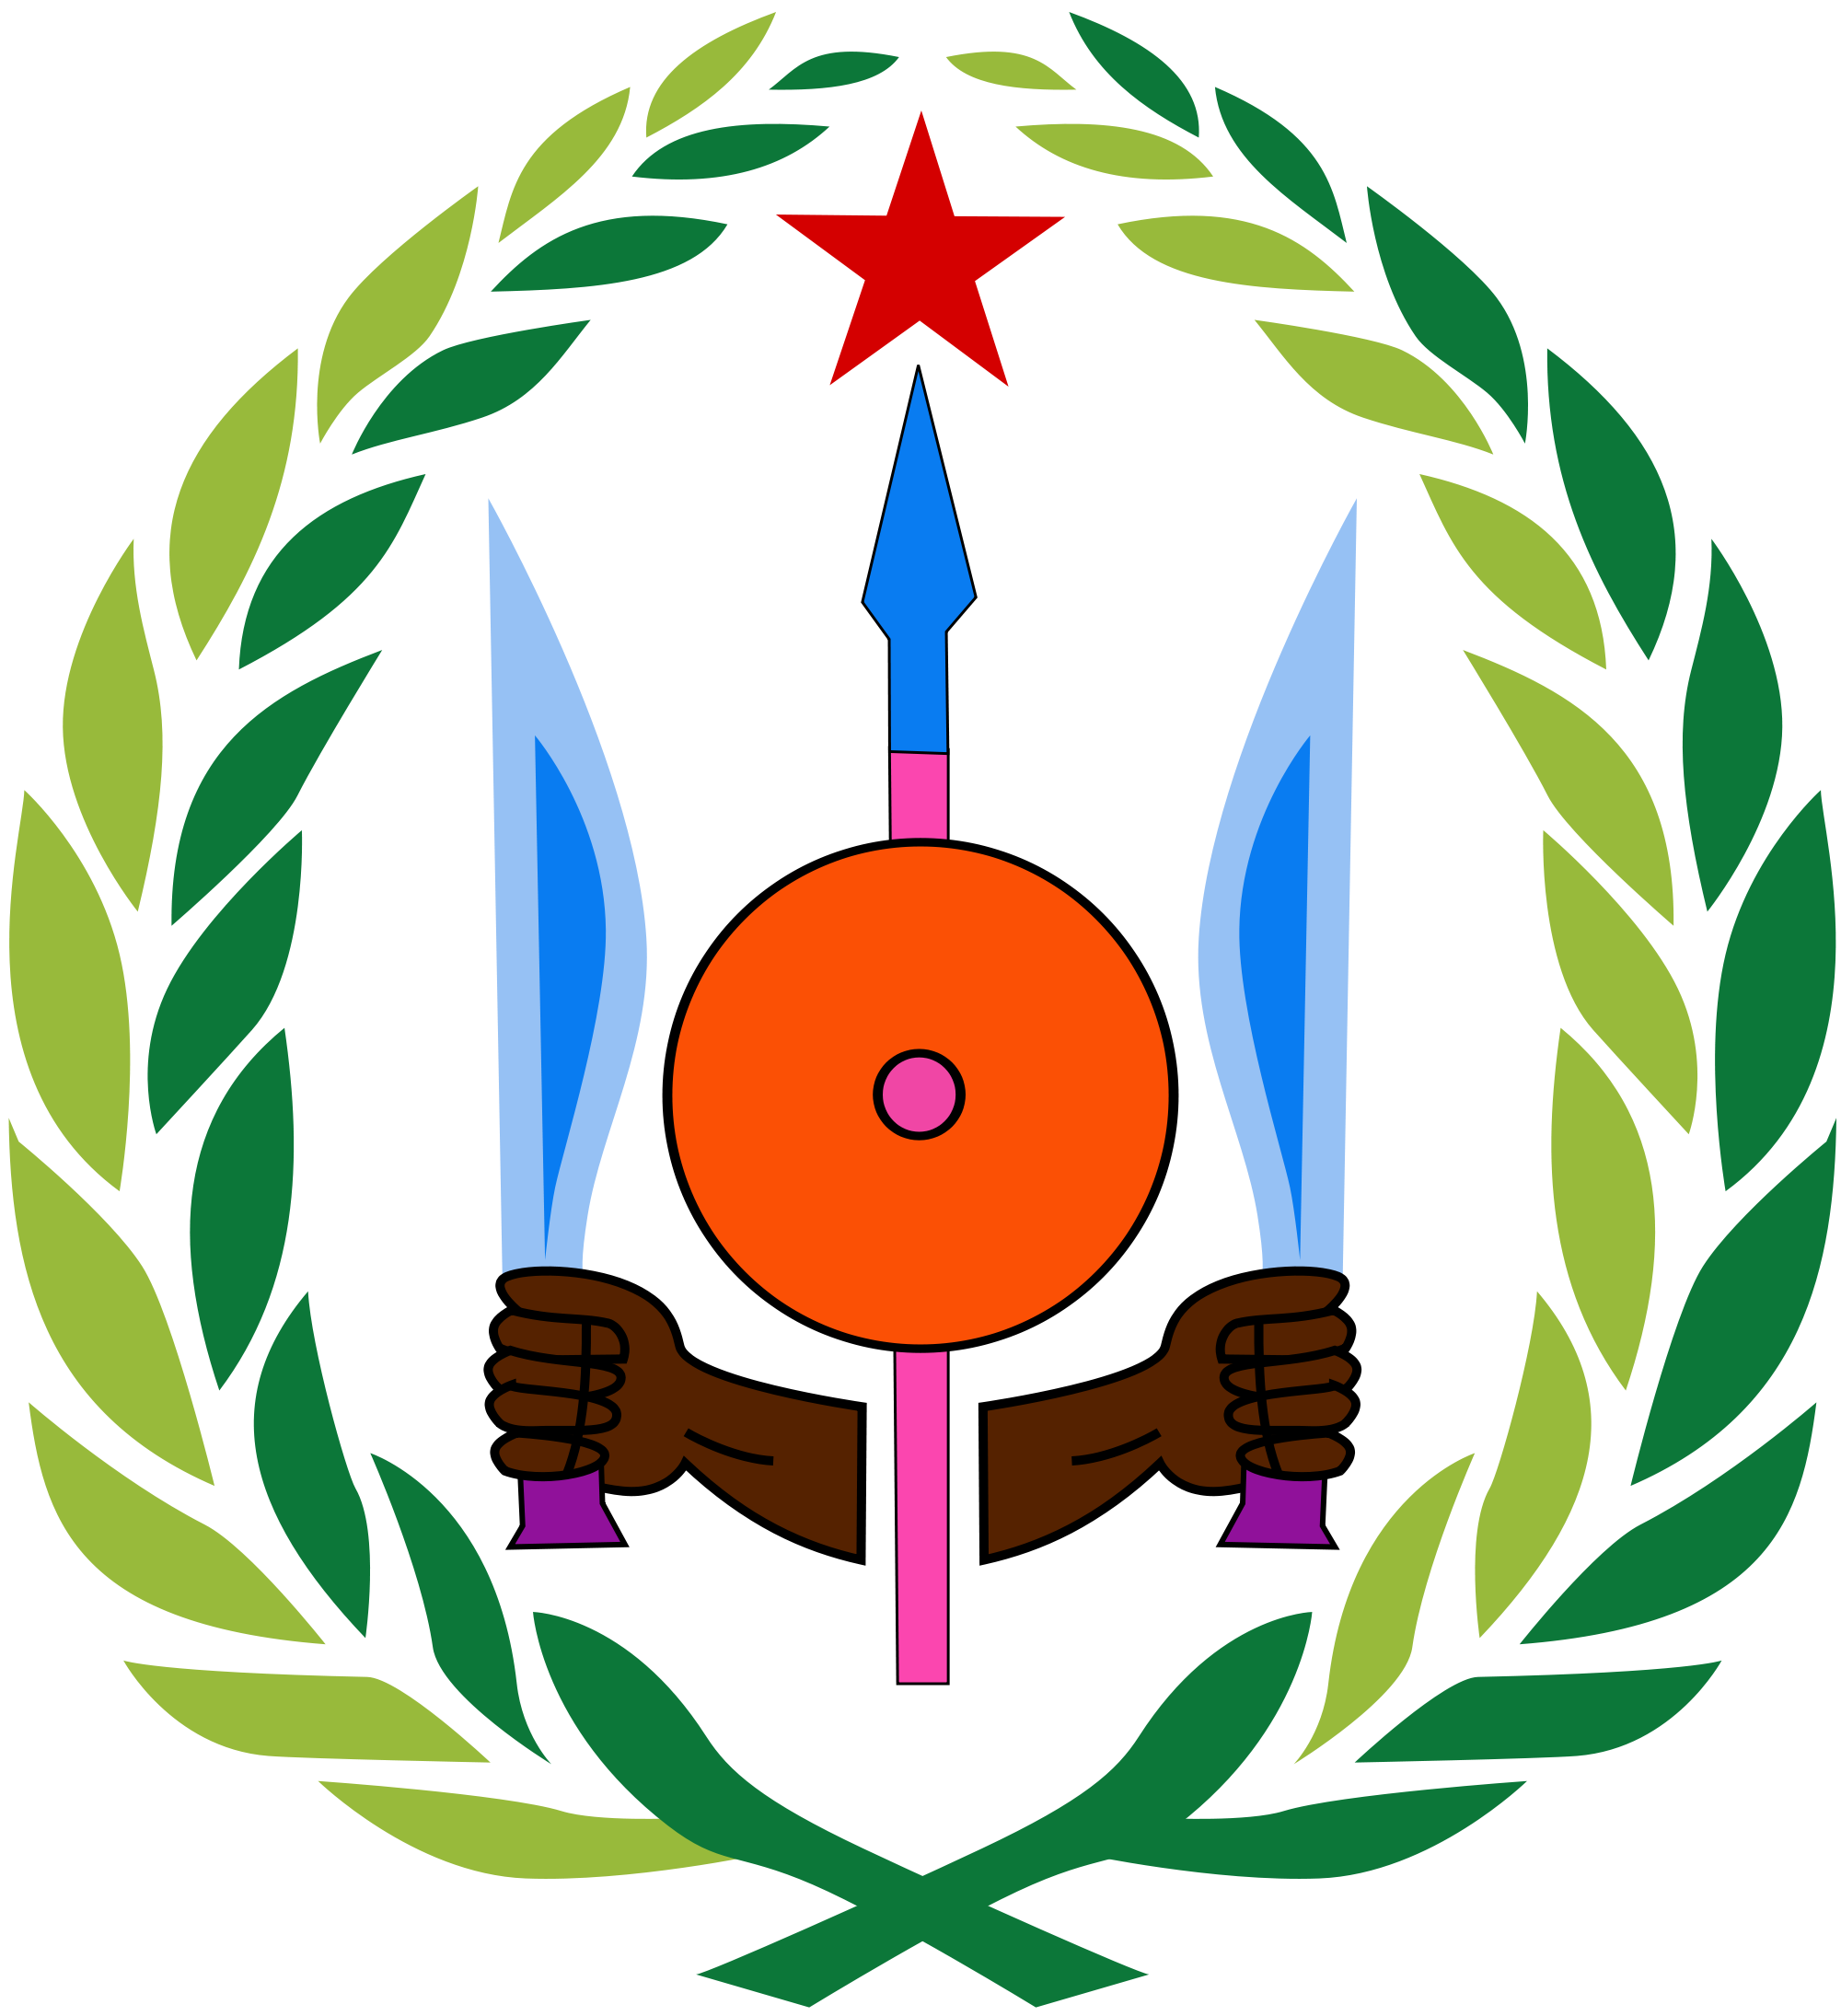 Emblem of Djibouti